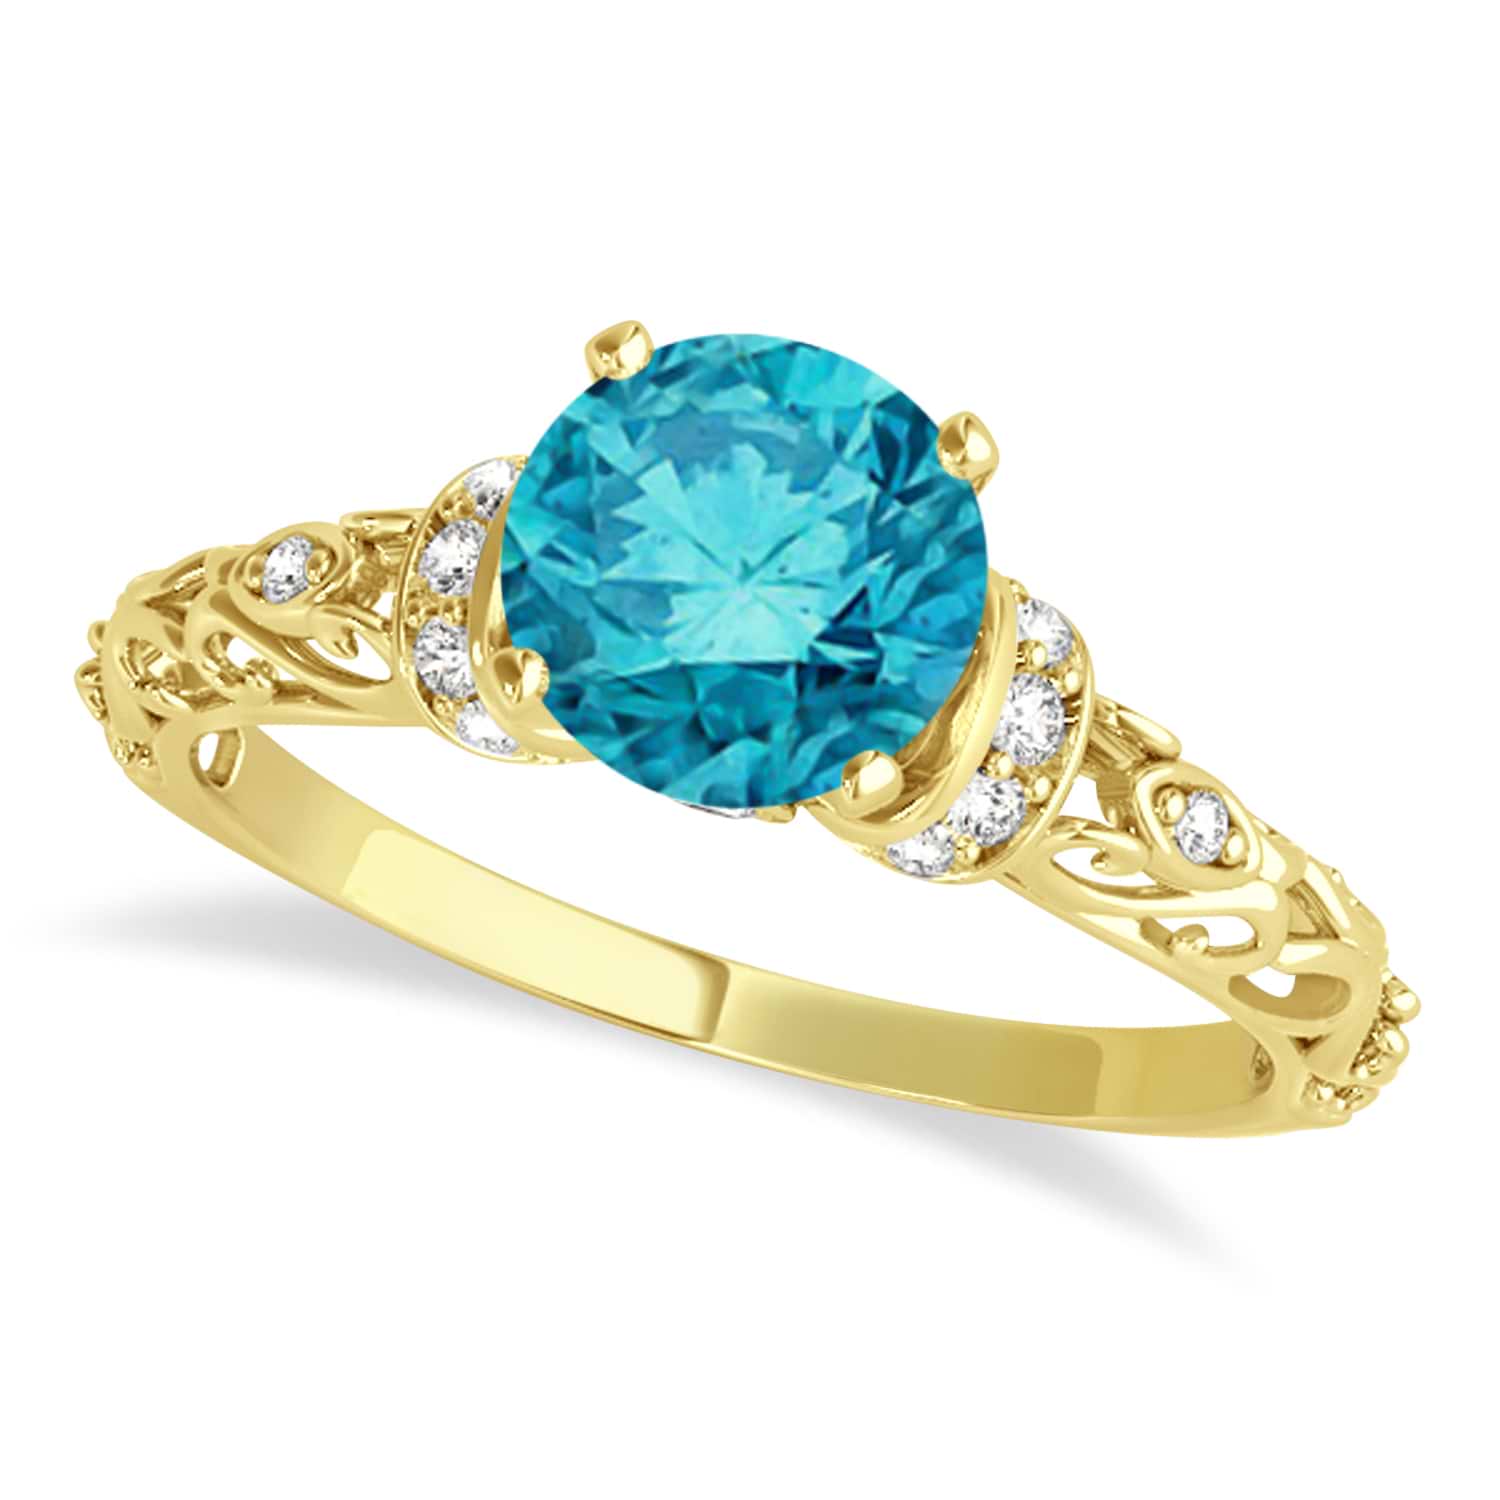 Blue Diamond & Diamond Antique Engagement Ring 14k Yellow Gold 0.87ct